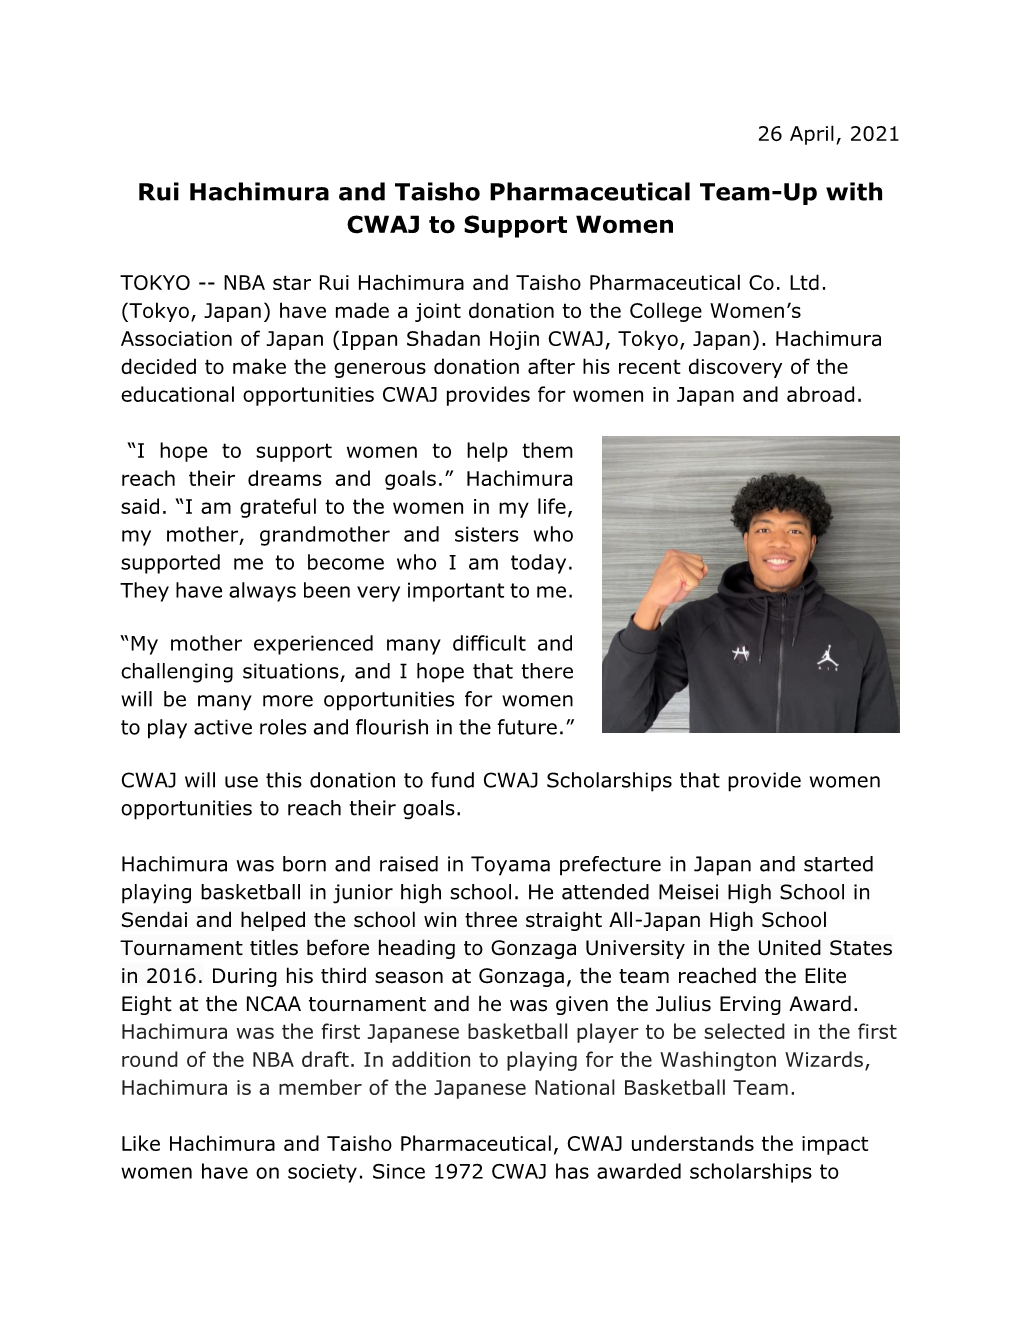 Rui Hachimura and Taisho Pharmaceutical Team-Up with CWAJ to Support Women